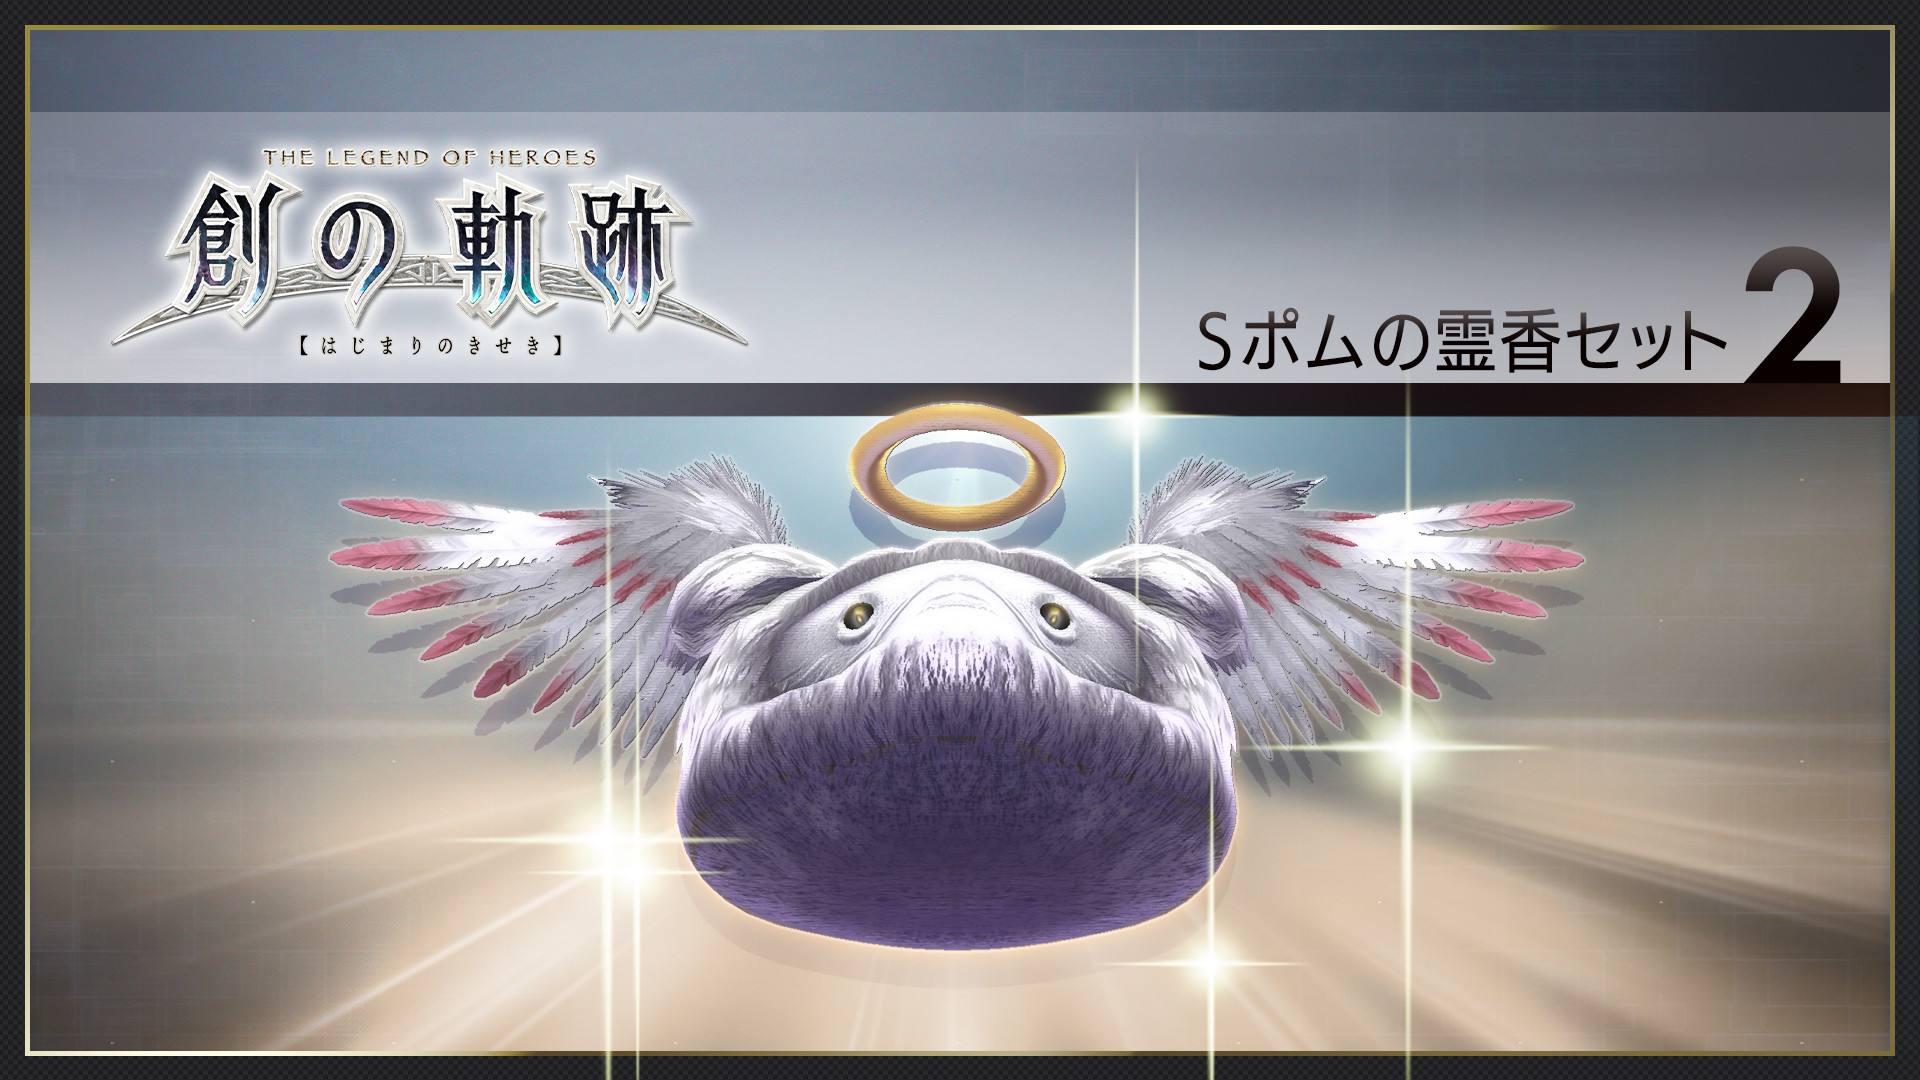 THE LEGEND OF HEROES: HAJIMARI NO KISEKI - Shining Pom Incense Set 2 Featured Screenshot #1